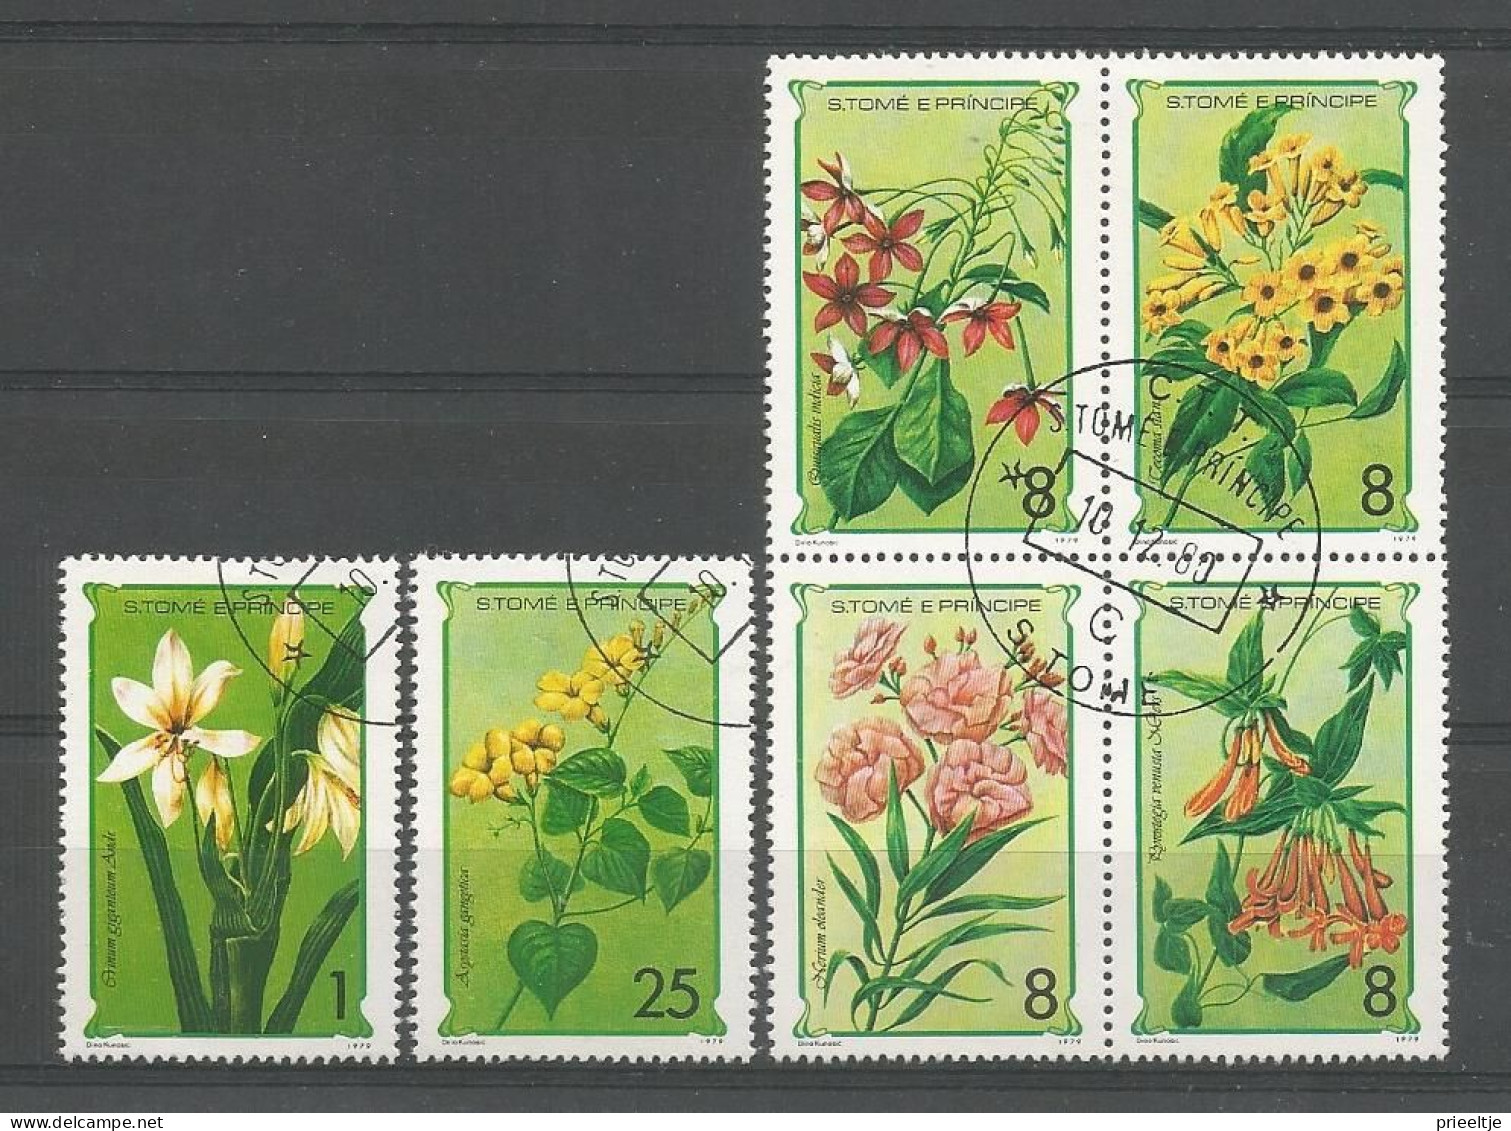 St Tome E Principe 1979 Flowers Y.T. 536/541 (0) - Sao Tome And Principe